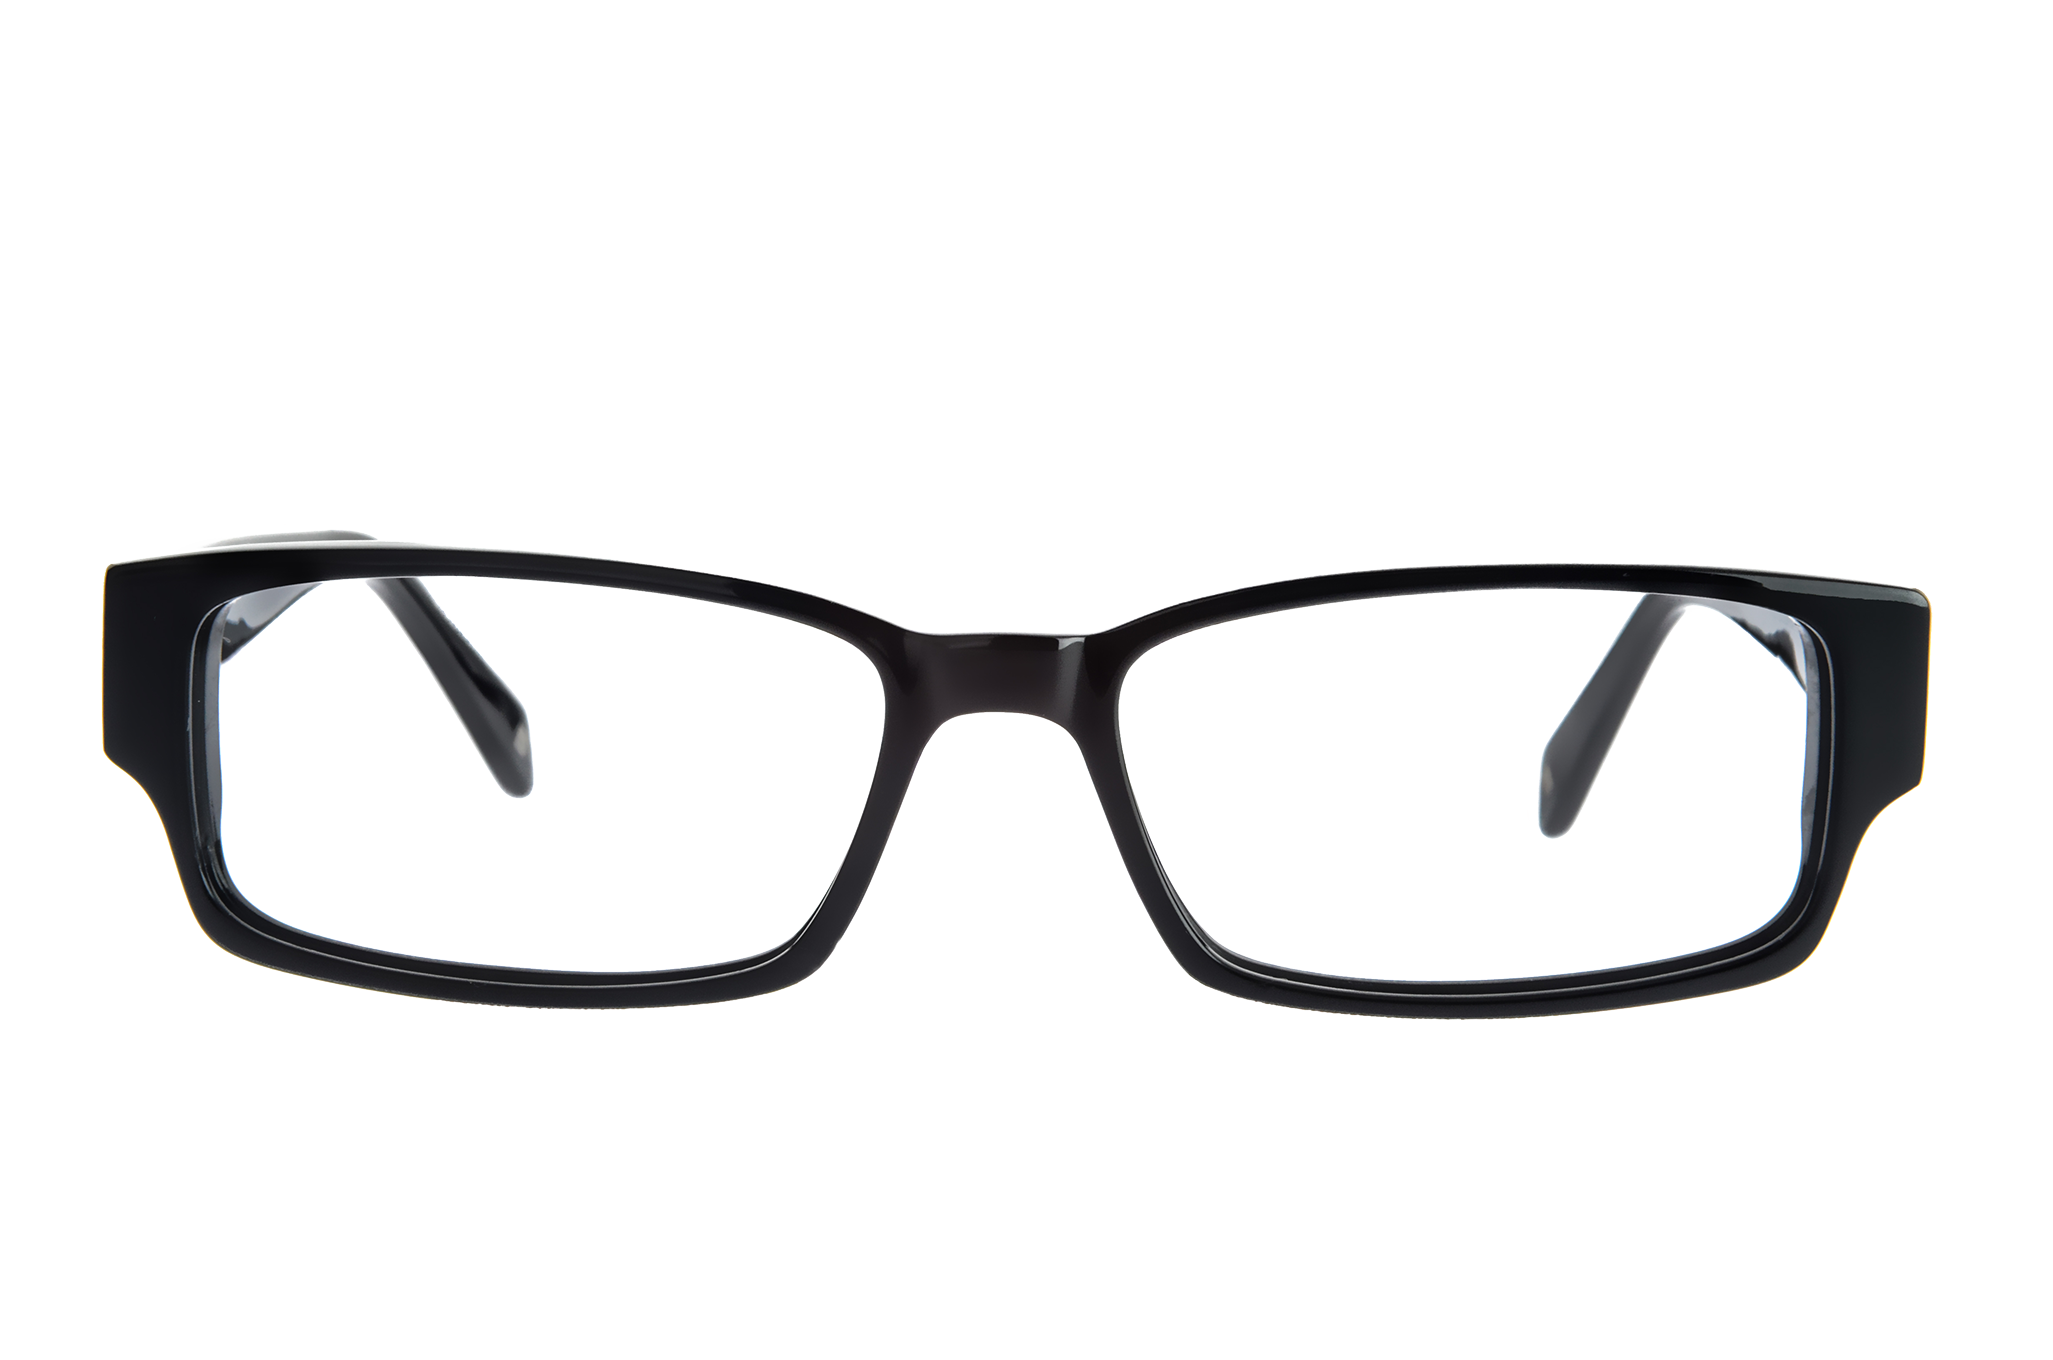 Glasses PNG Images Transparent Free Download | PNGMart